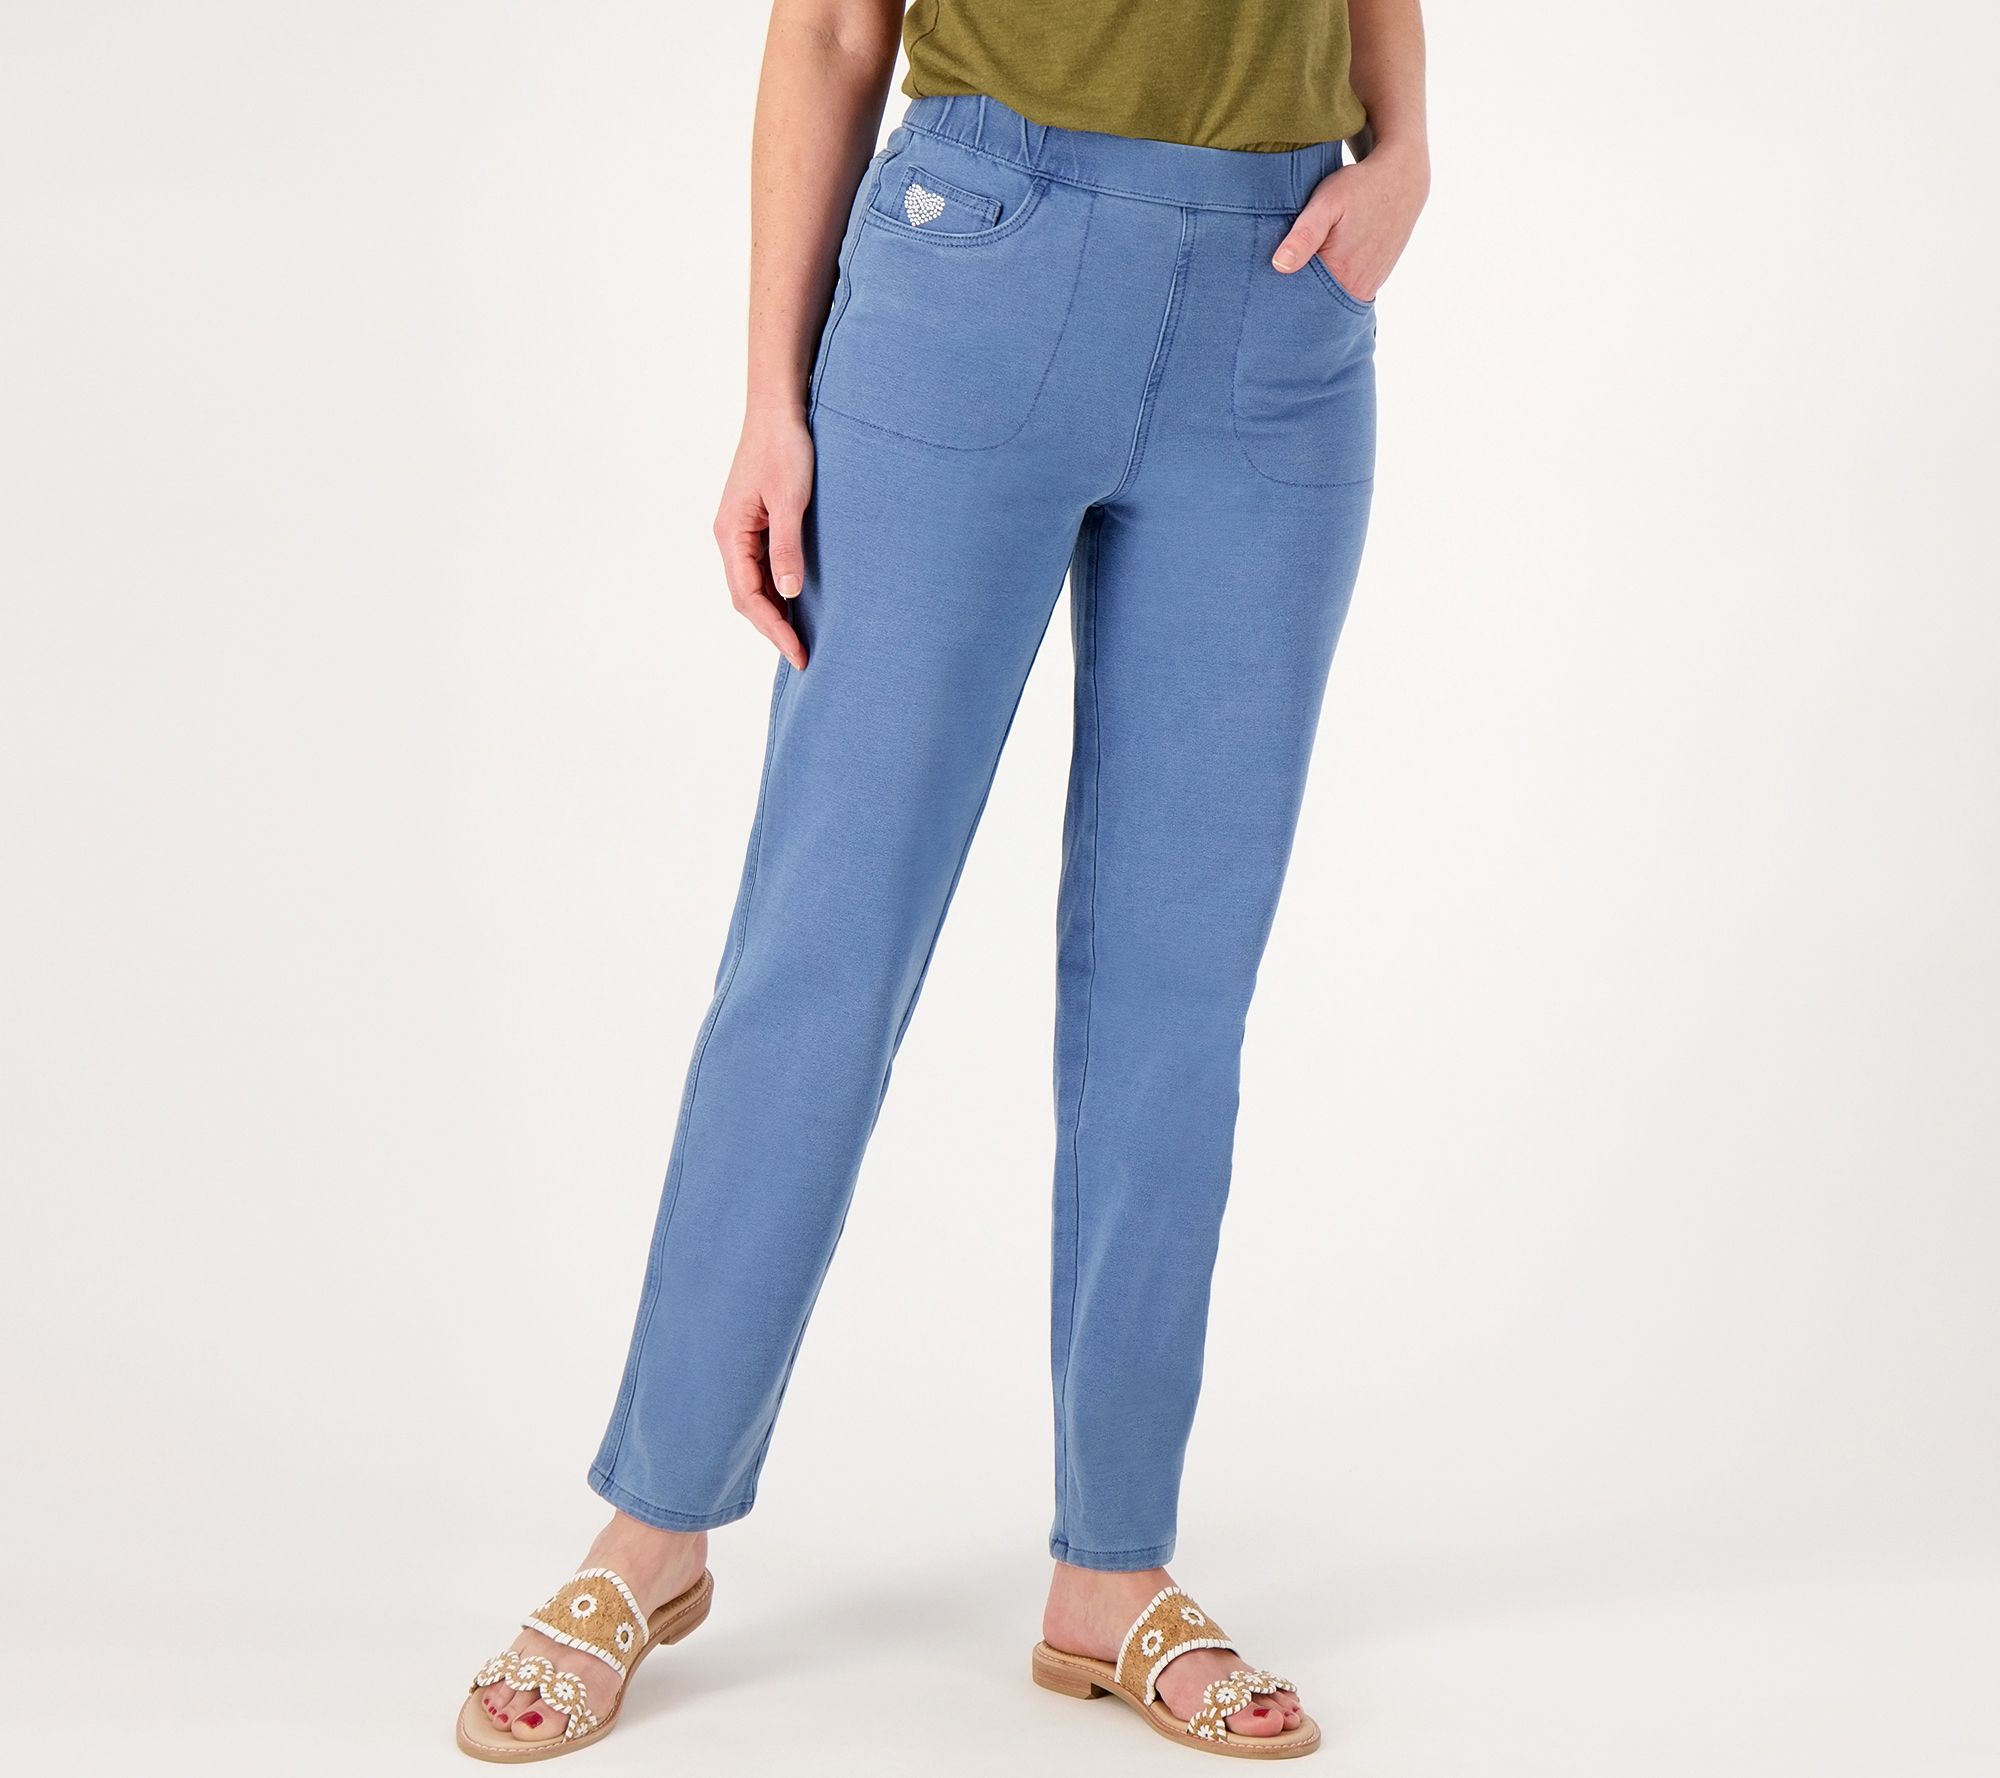 Quacker Factory Dream Jeans Pull On Stretch Capri Pants Size XL